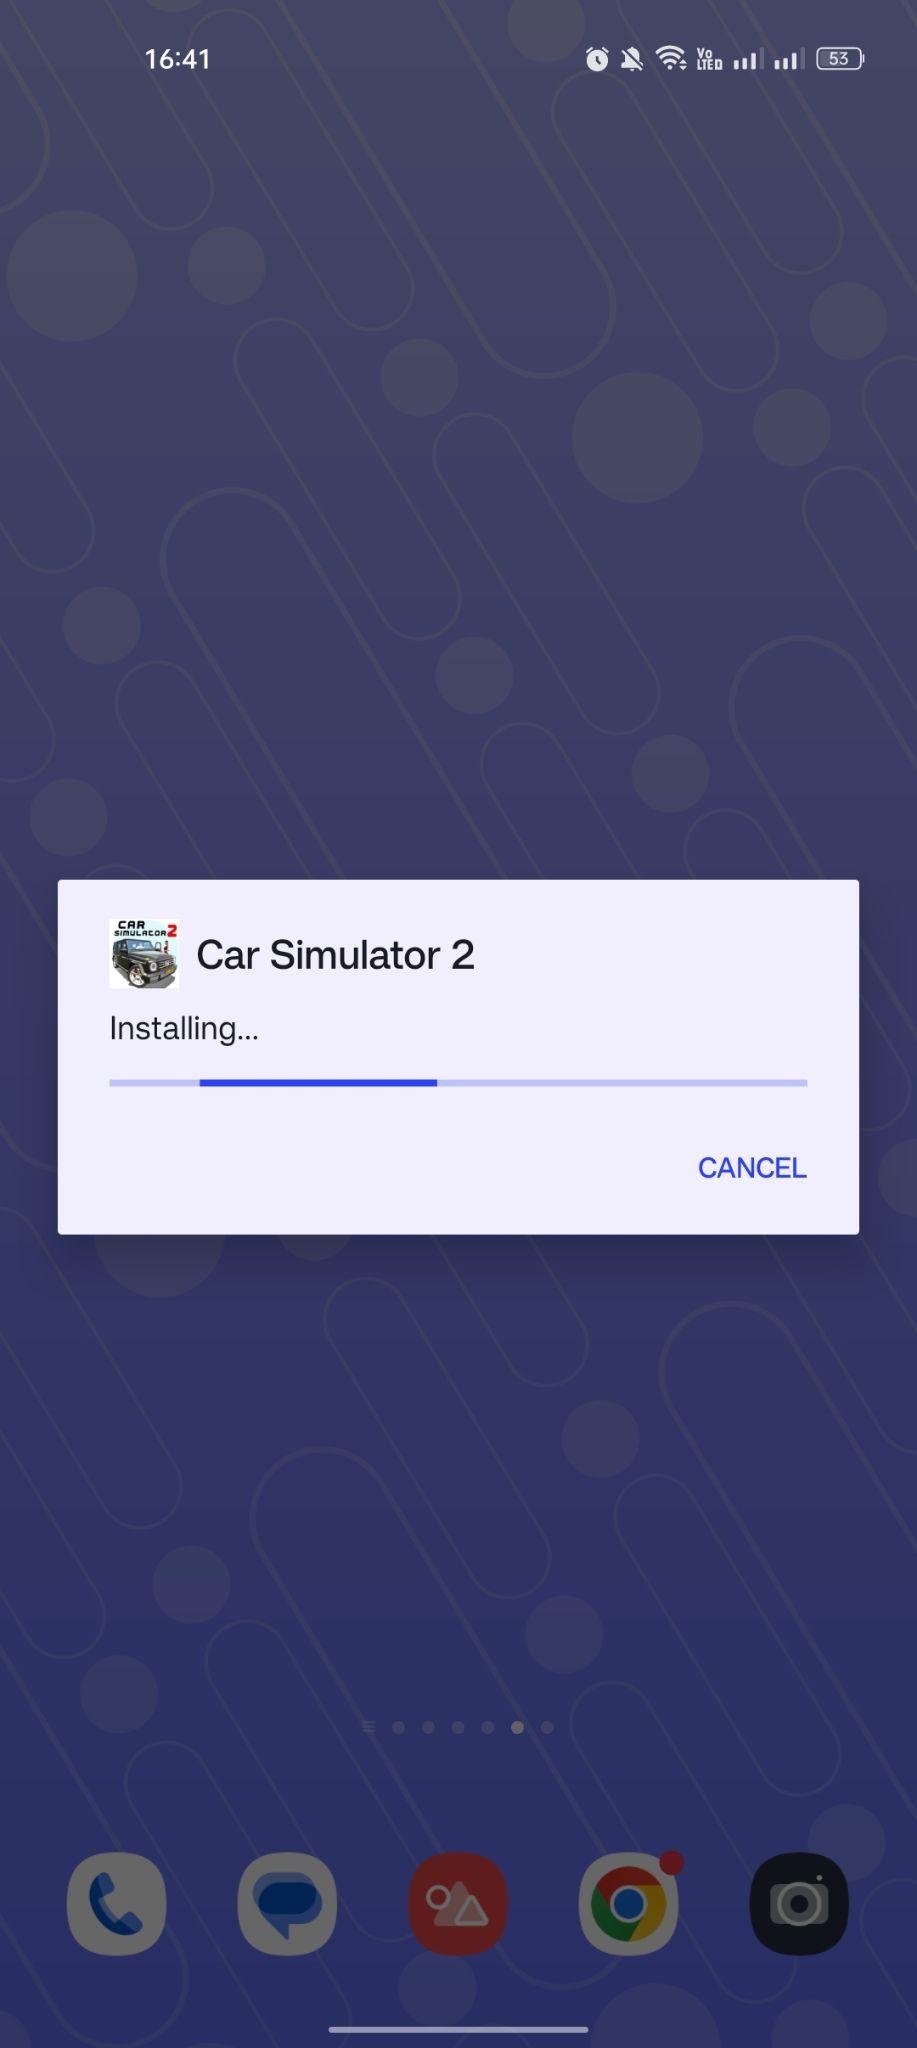 Car Simulator 2 apk installing